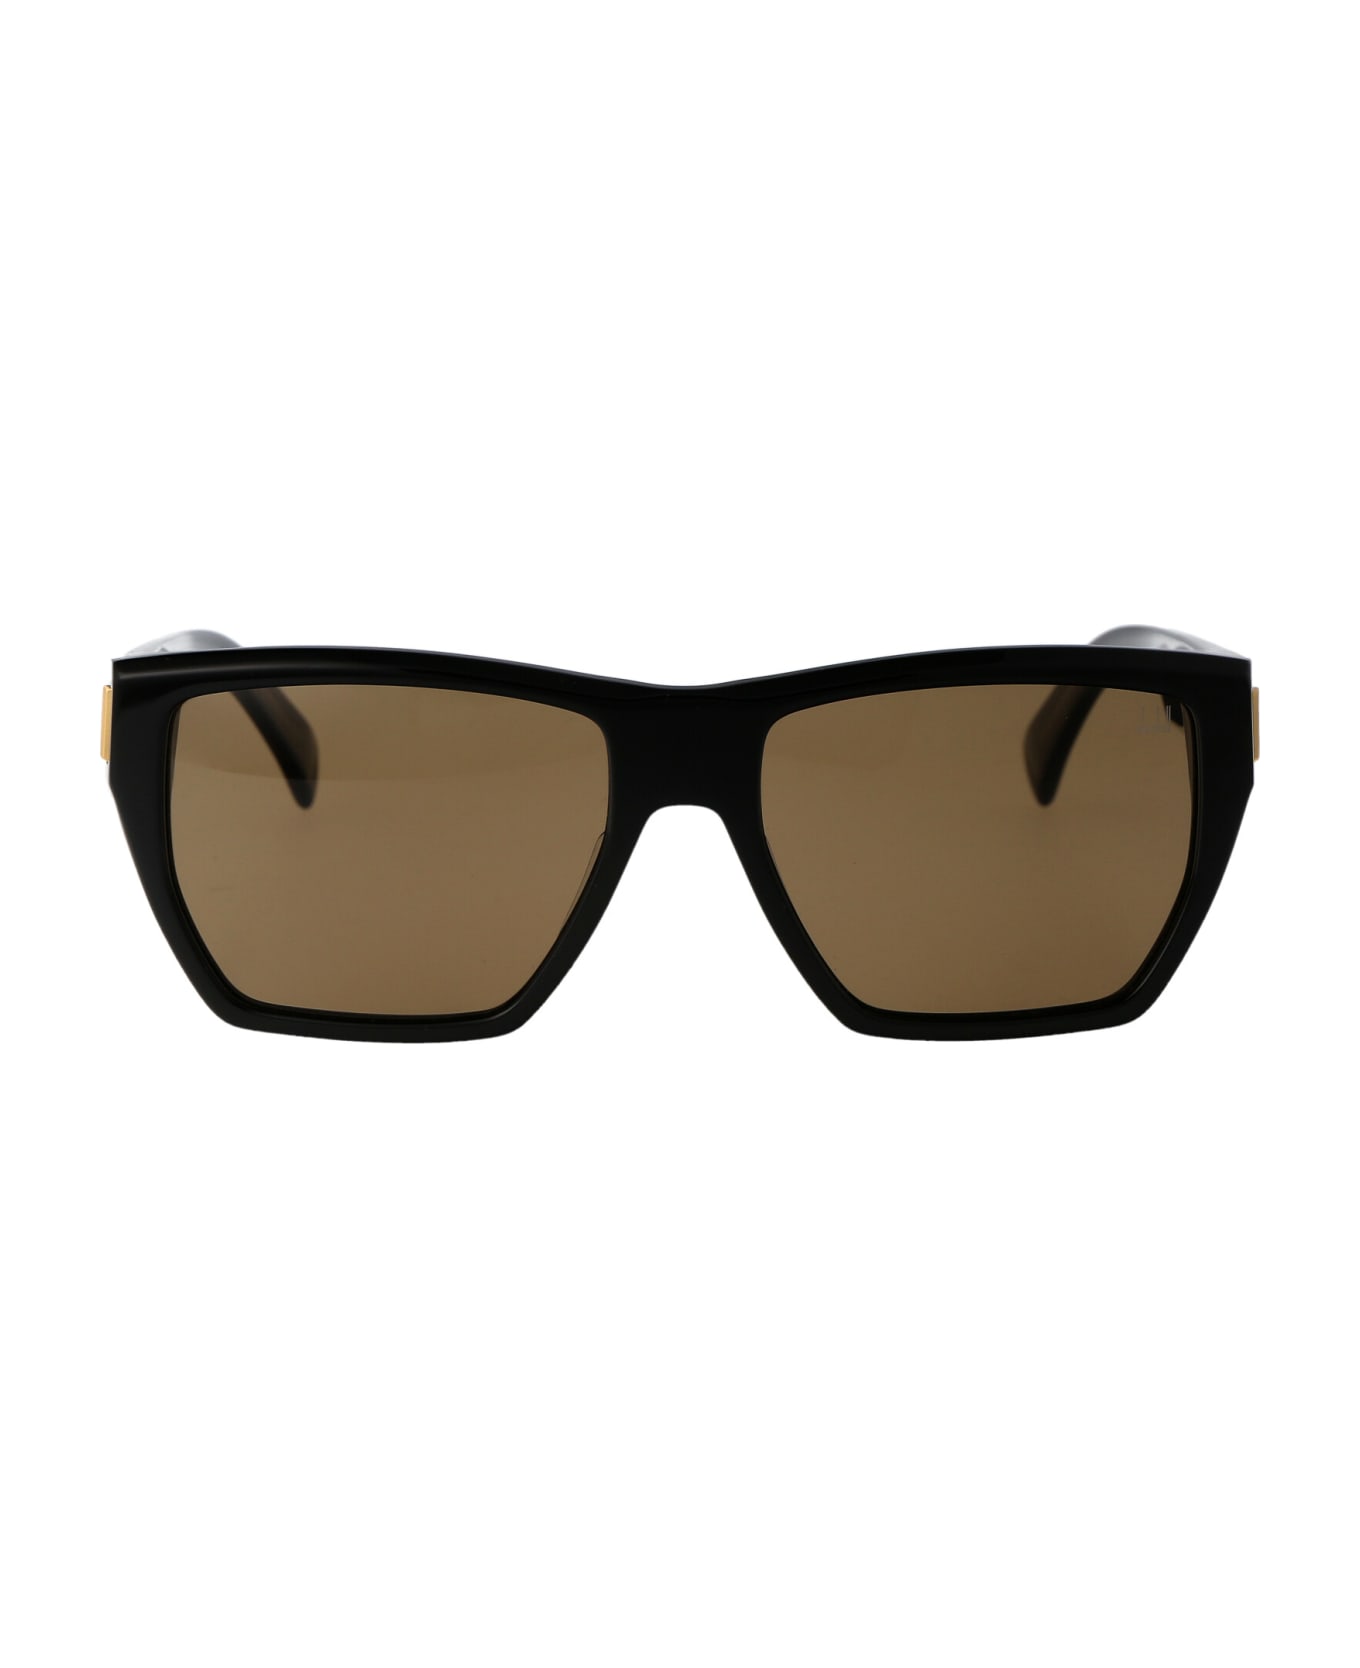 Dunhill Du0031s Sunglasses - 001 BLACK BLACK BROWN